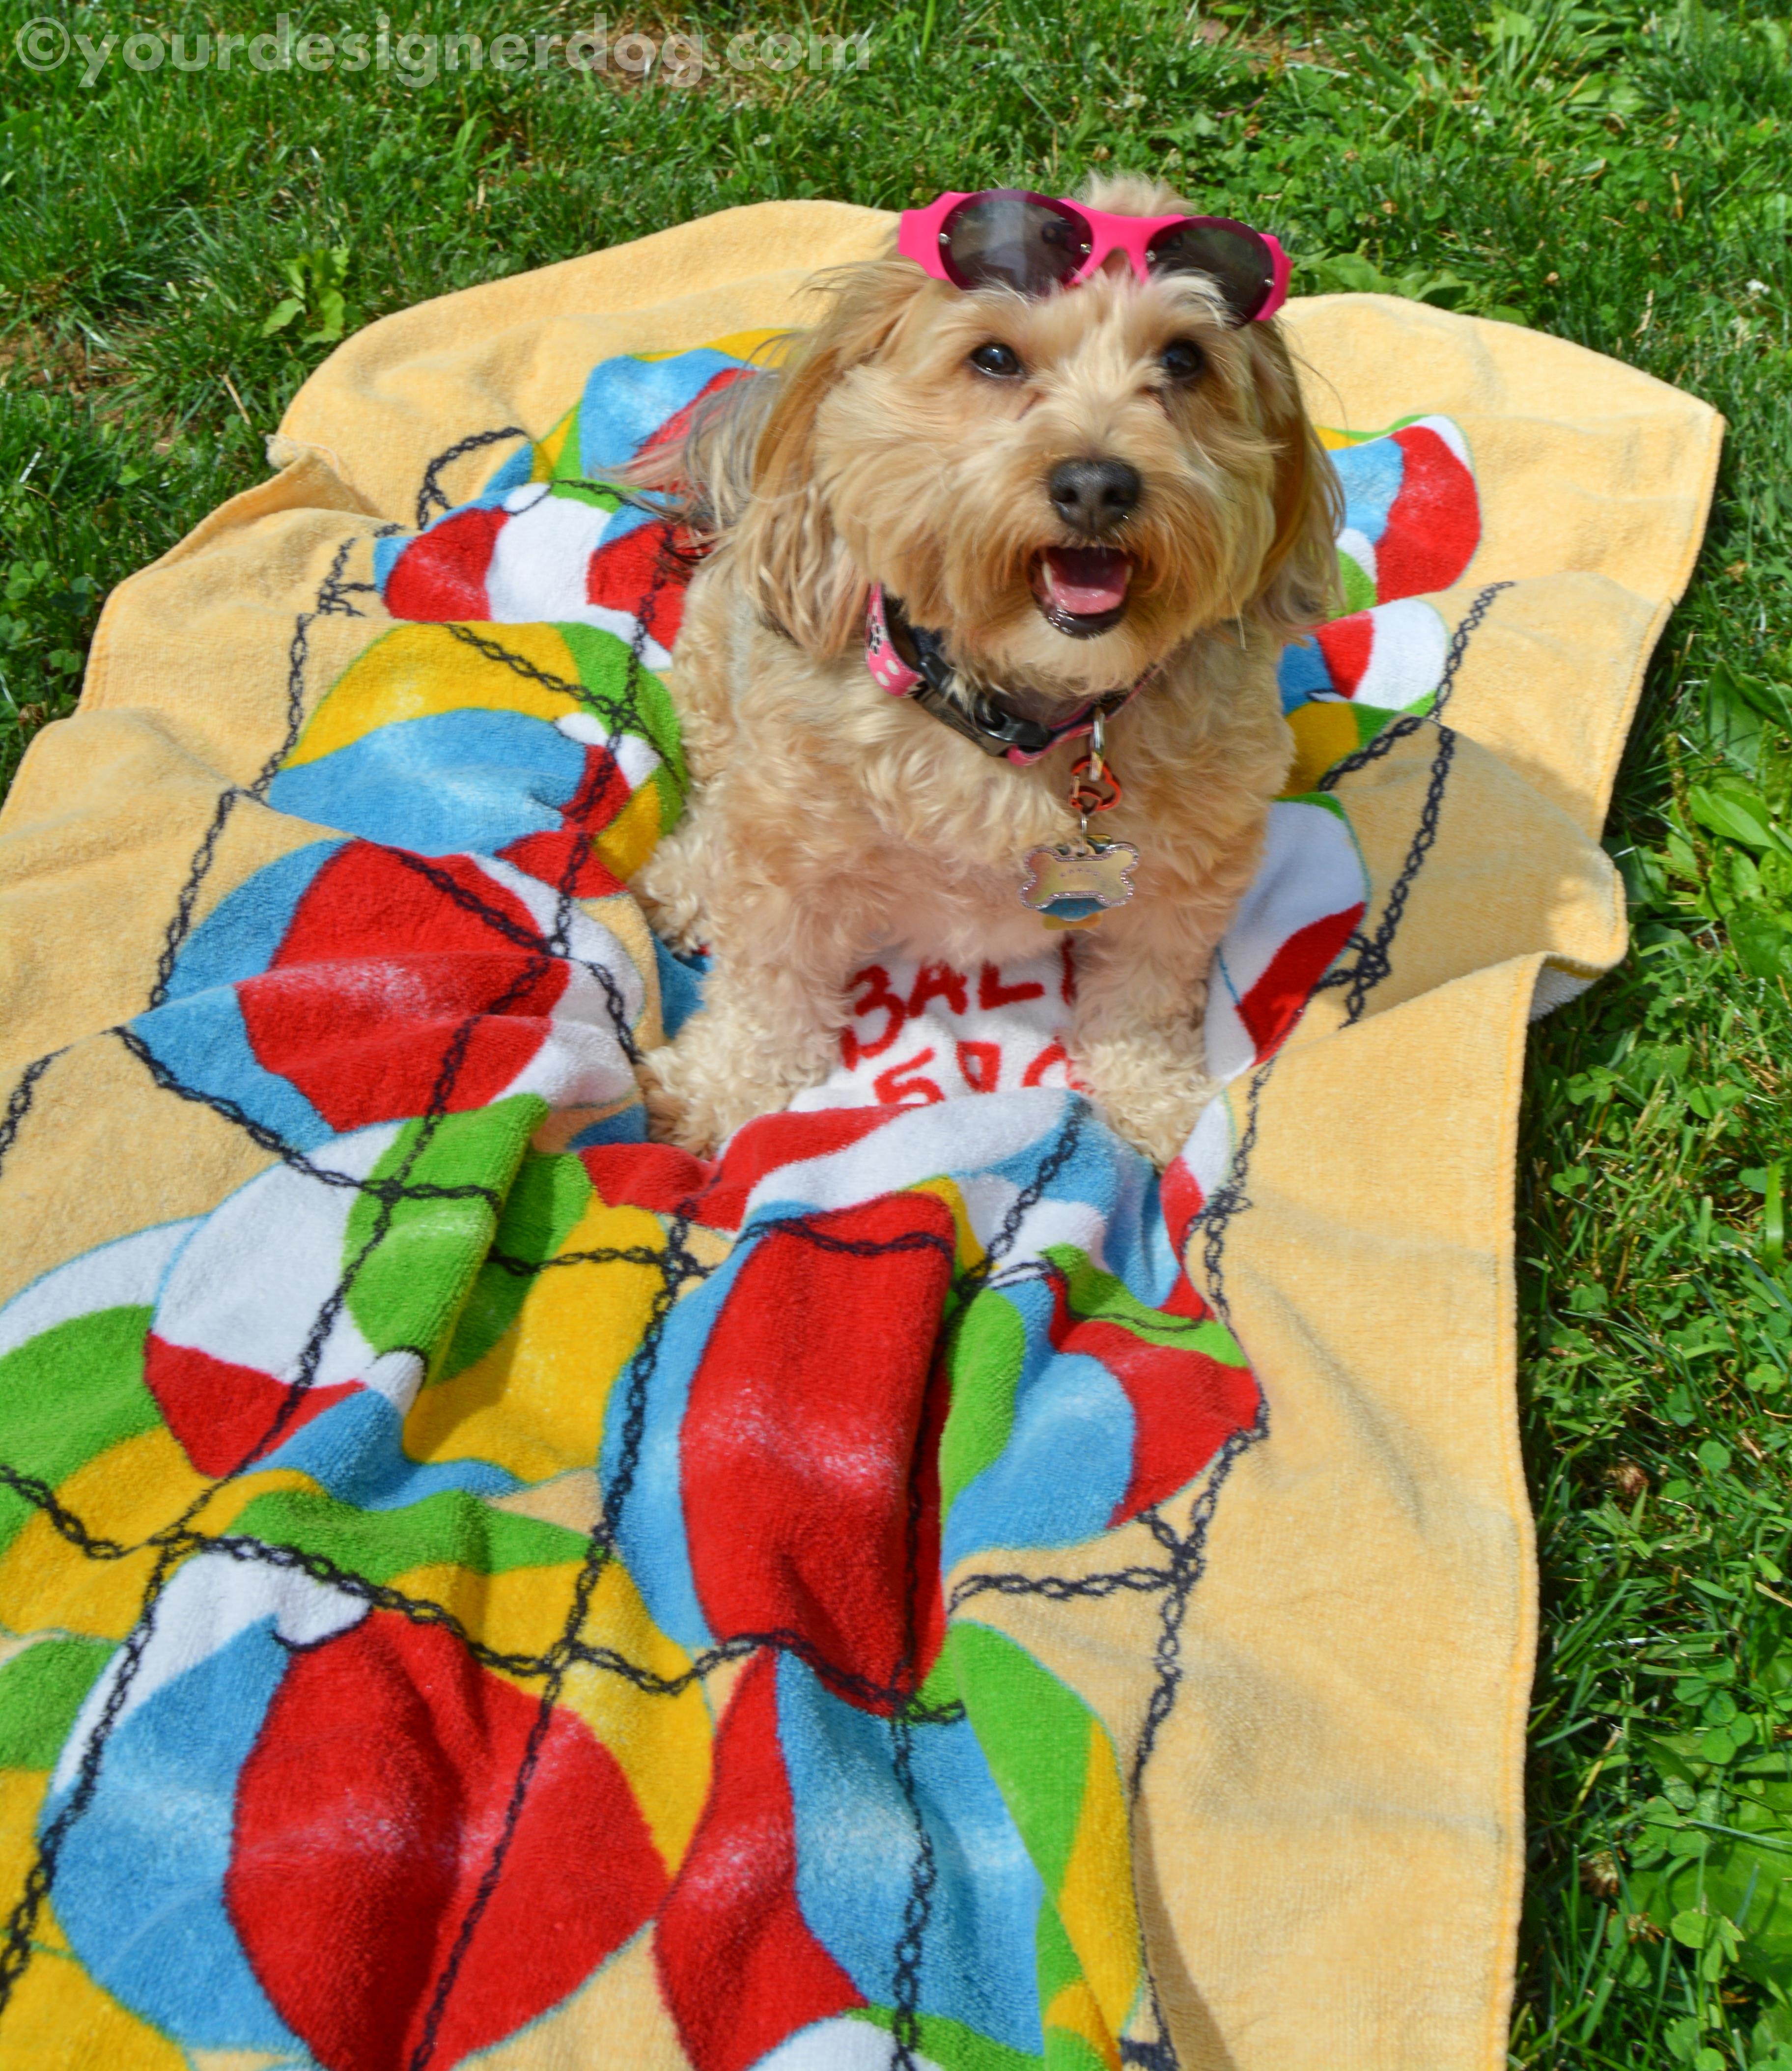 dogs, designer dogs, yorkipoo, yorkie poo, summer, sun glasses, beach towel, dog smiling